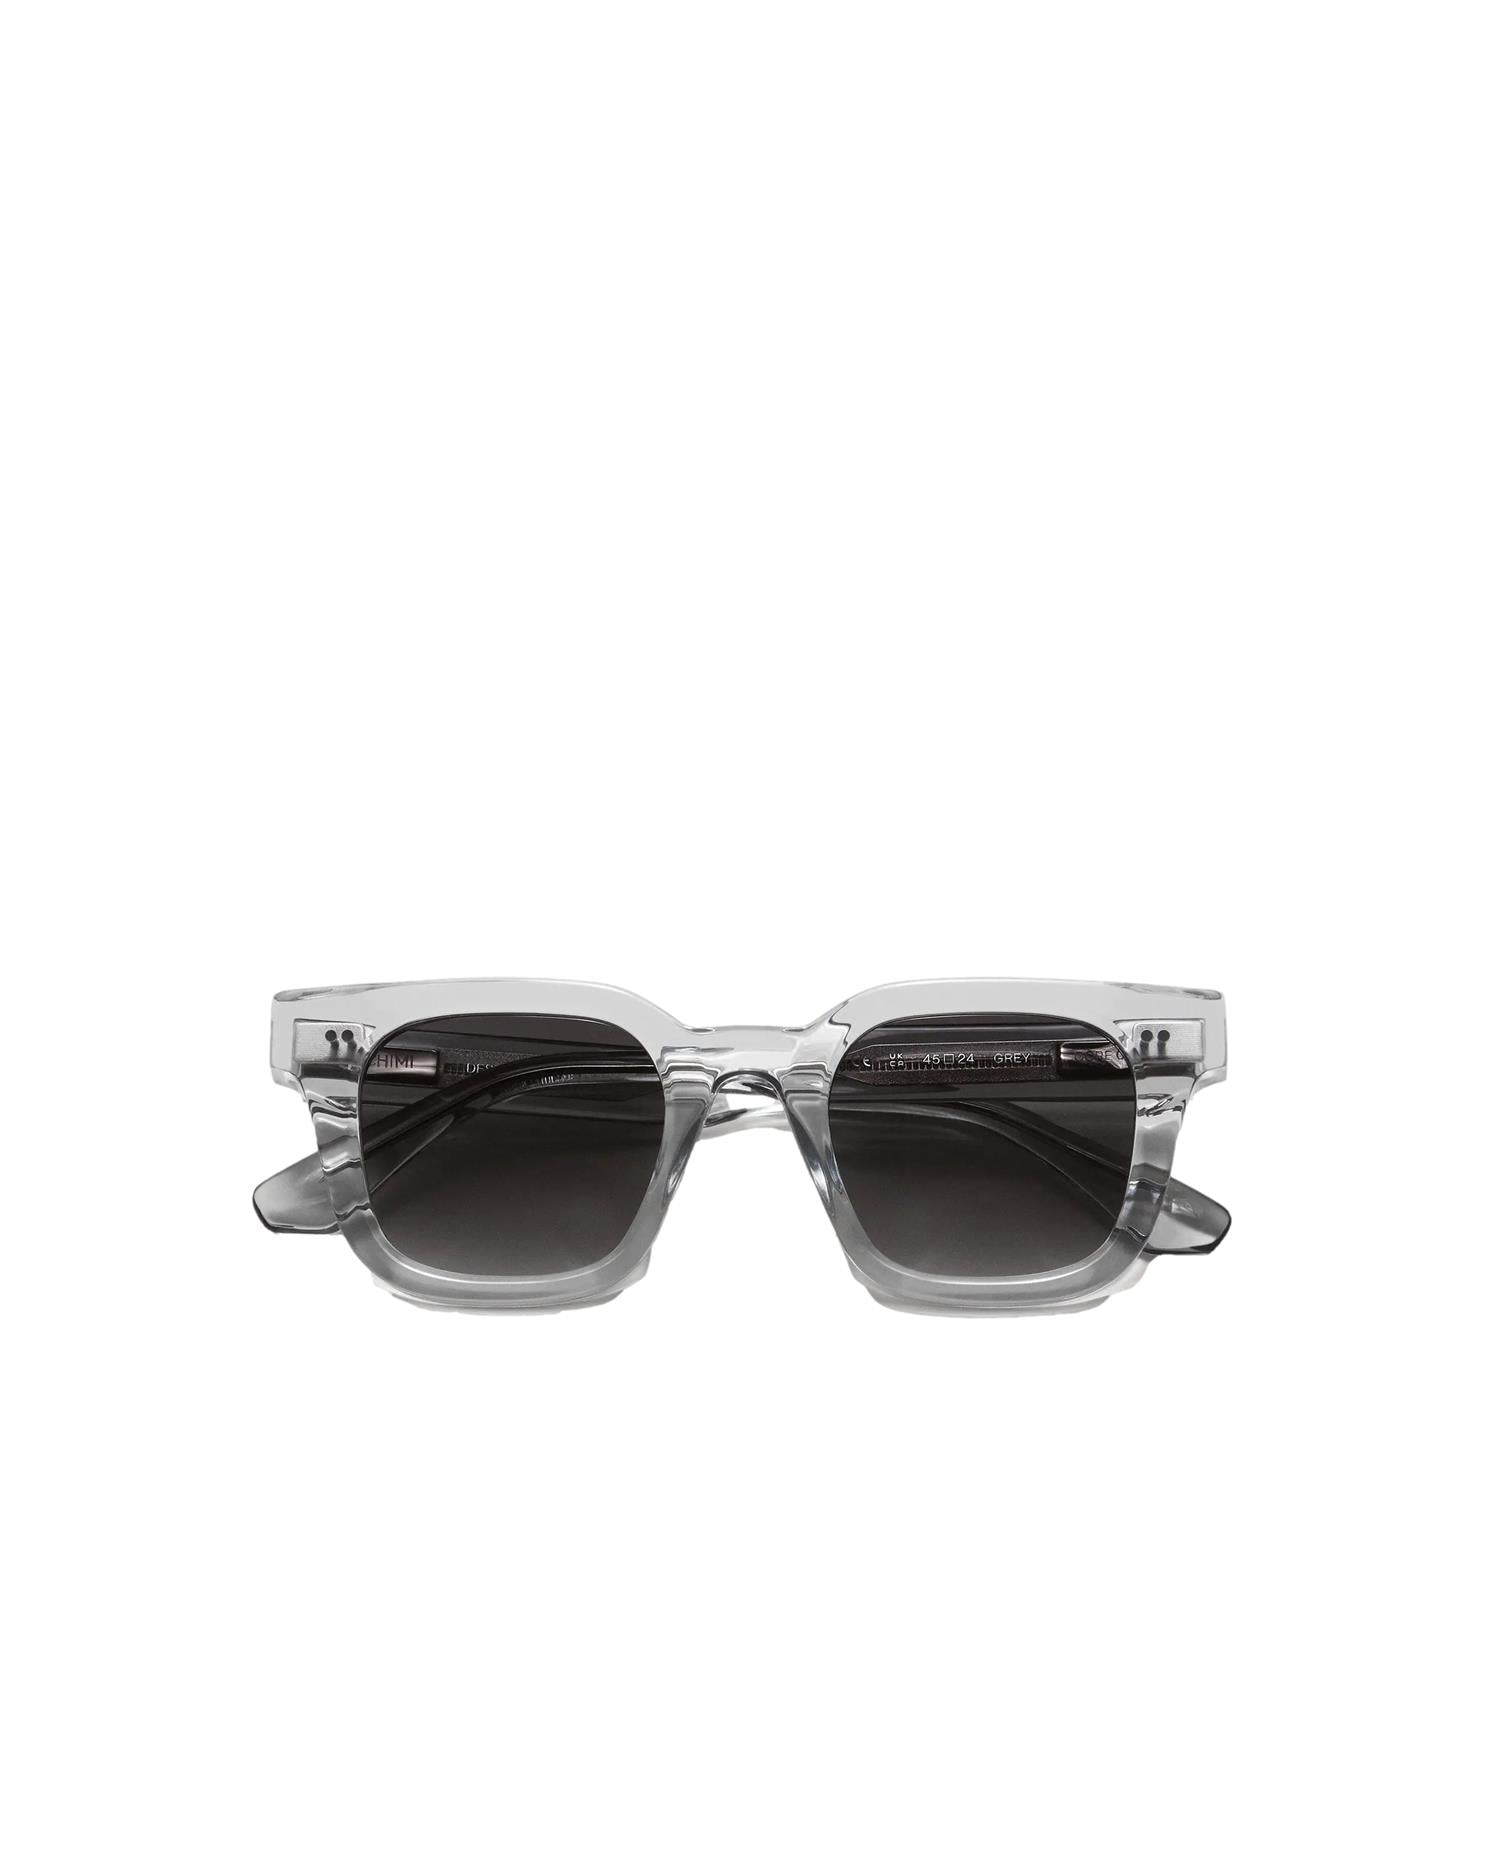 Chimi Eyewear 04 Grey Solbriller Grå